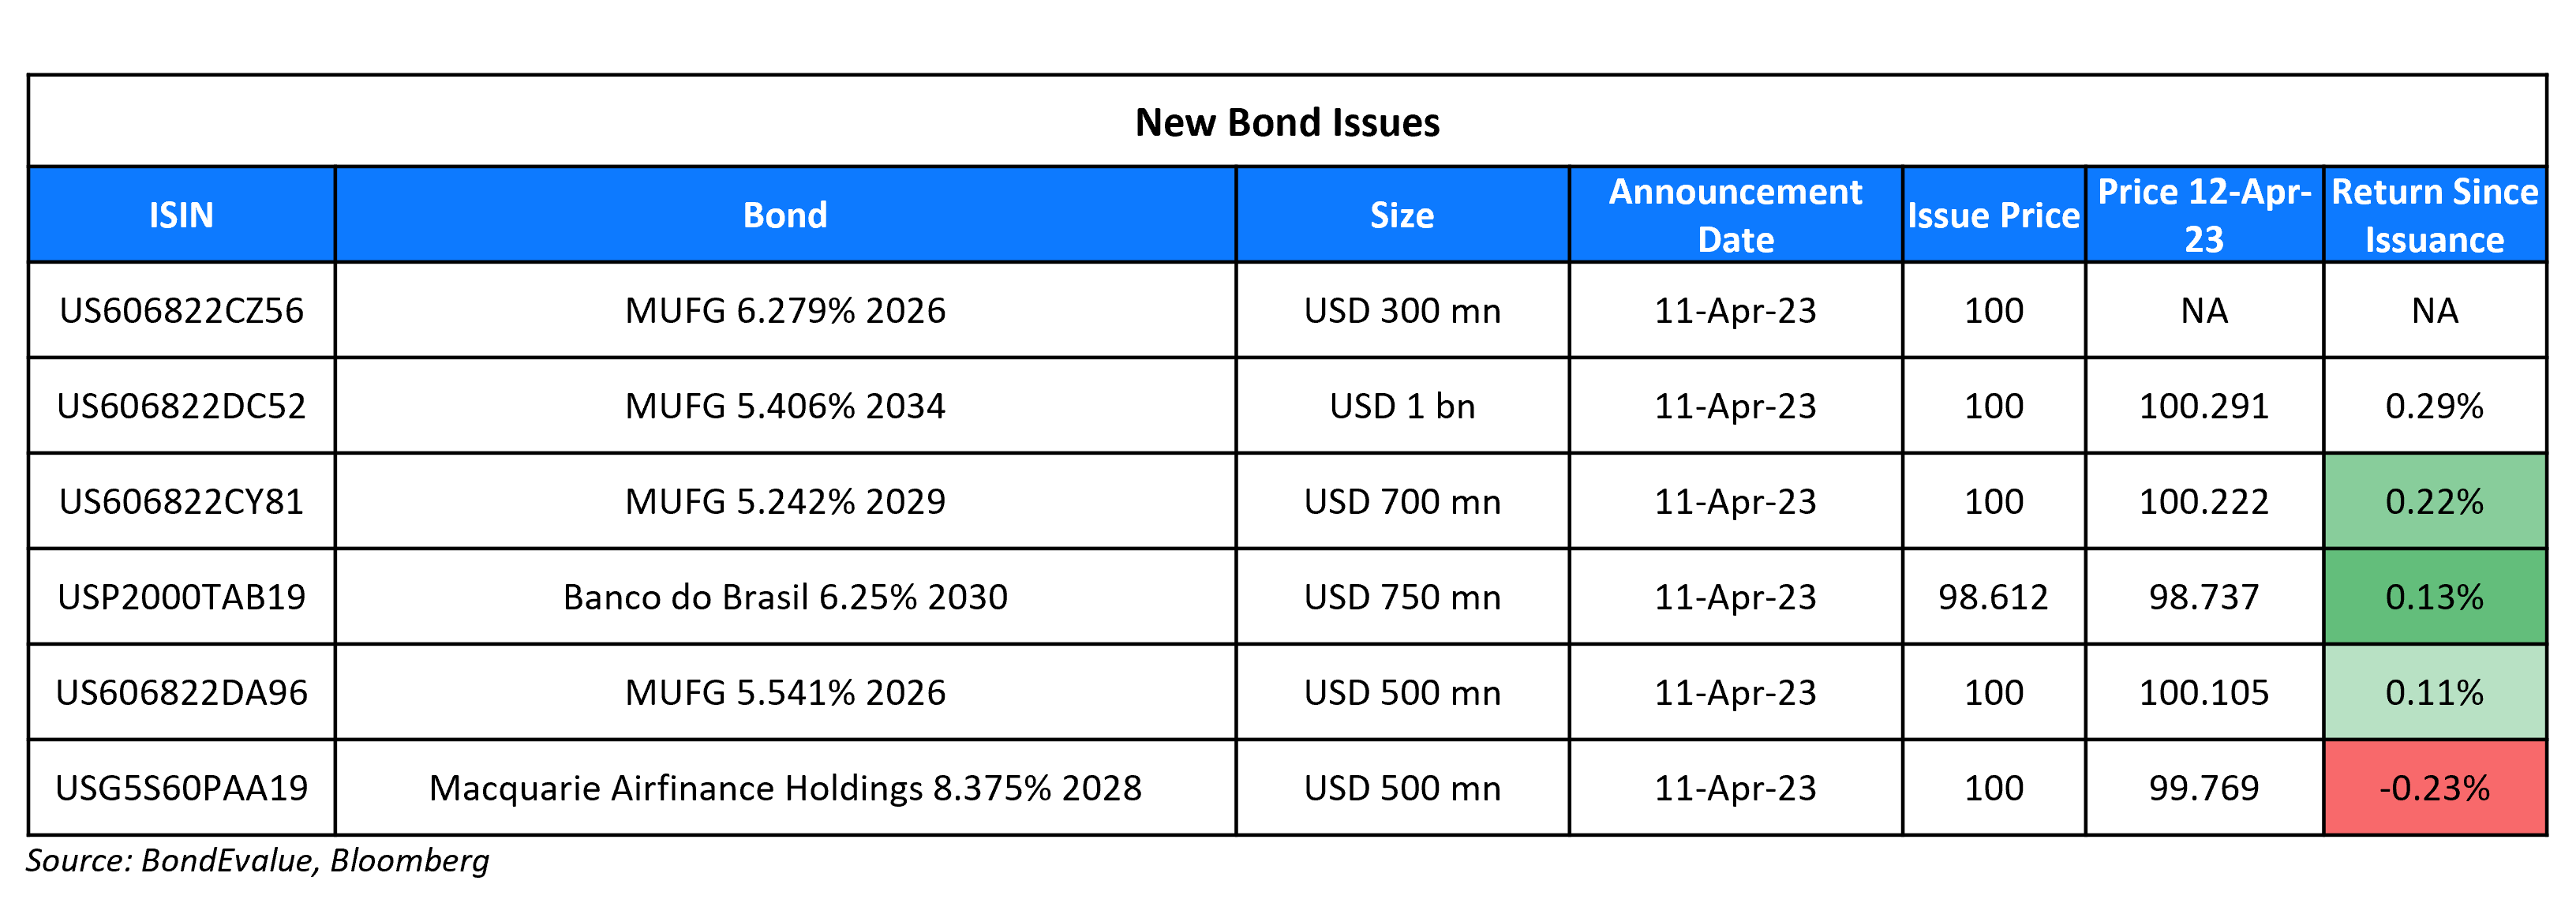 New Bond Issues 12 Apr 23